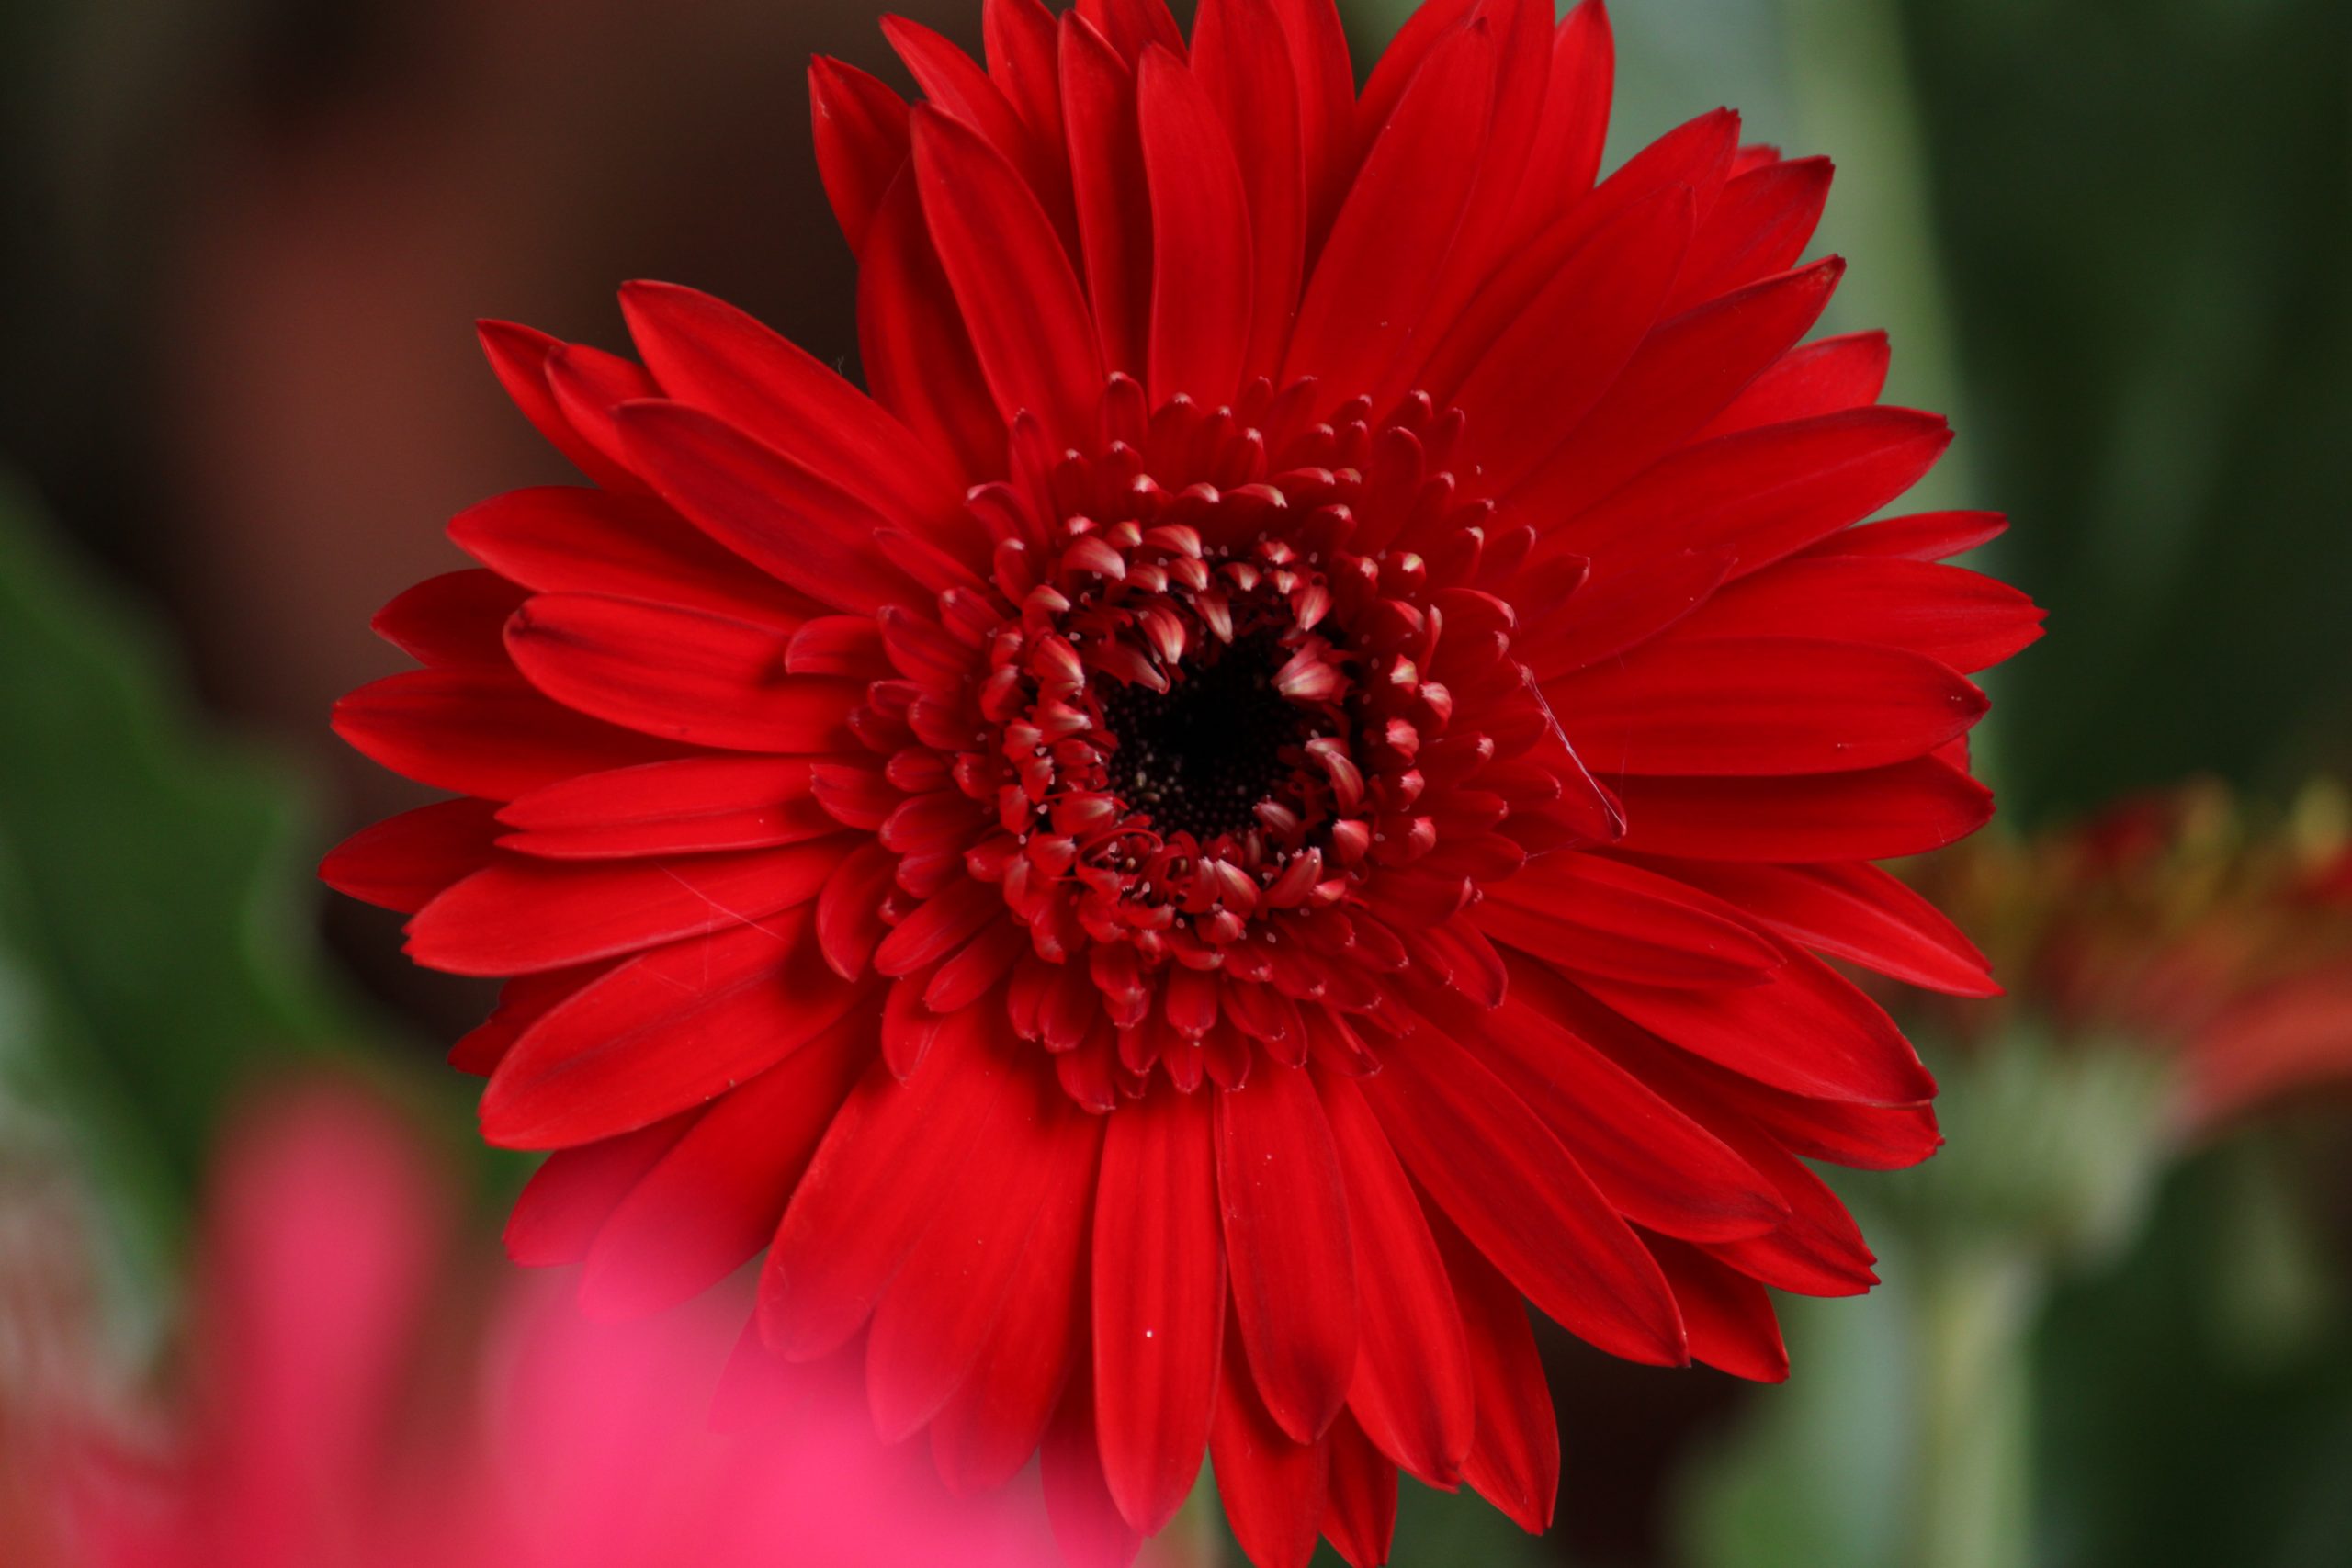 Barberton daisy flower